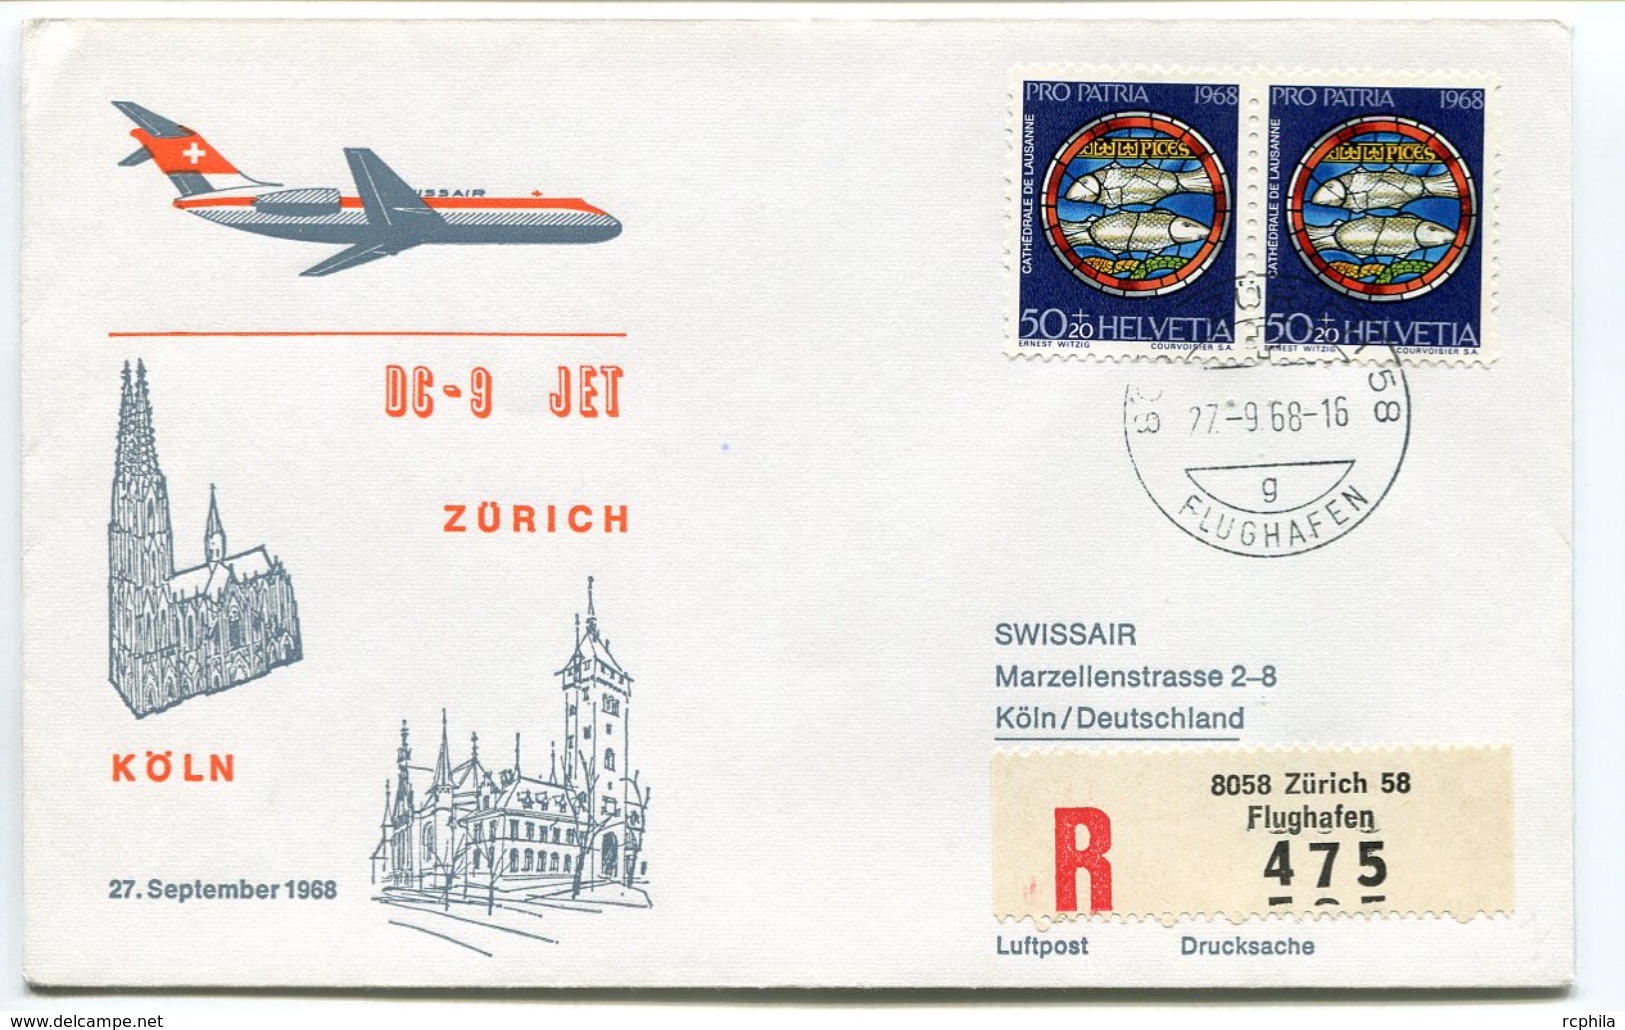 RC 6632 SUISSE 1968 1er VOL SWISSAIR ZURICH - KOLN ALLEMAGNE DC-9 FFC LETTRE COVER - Primi Voli